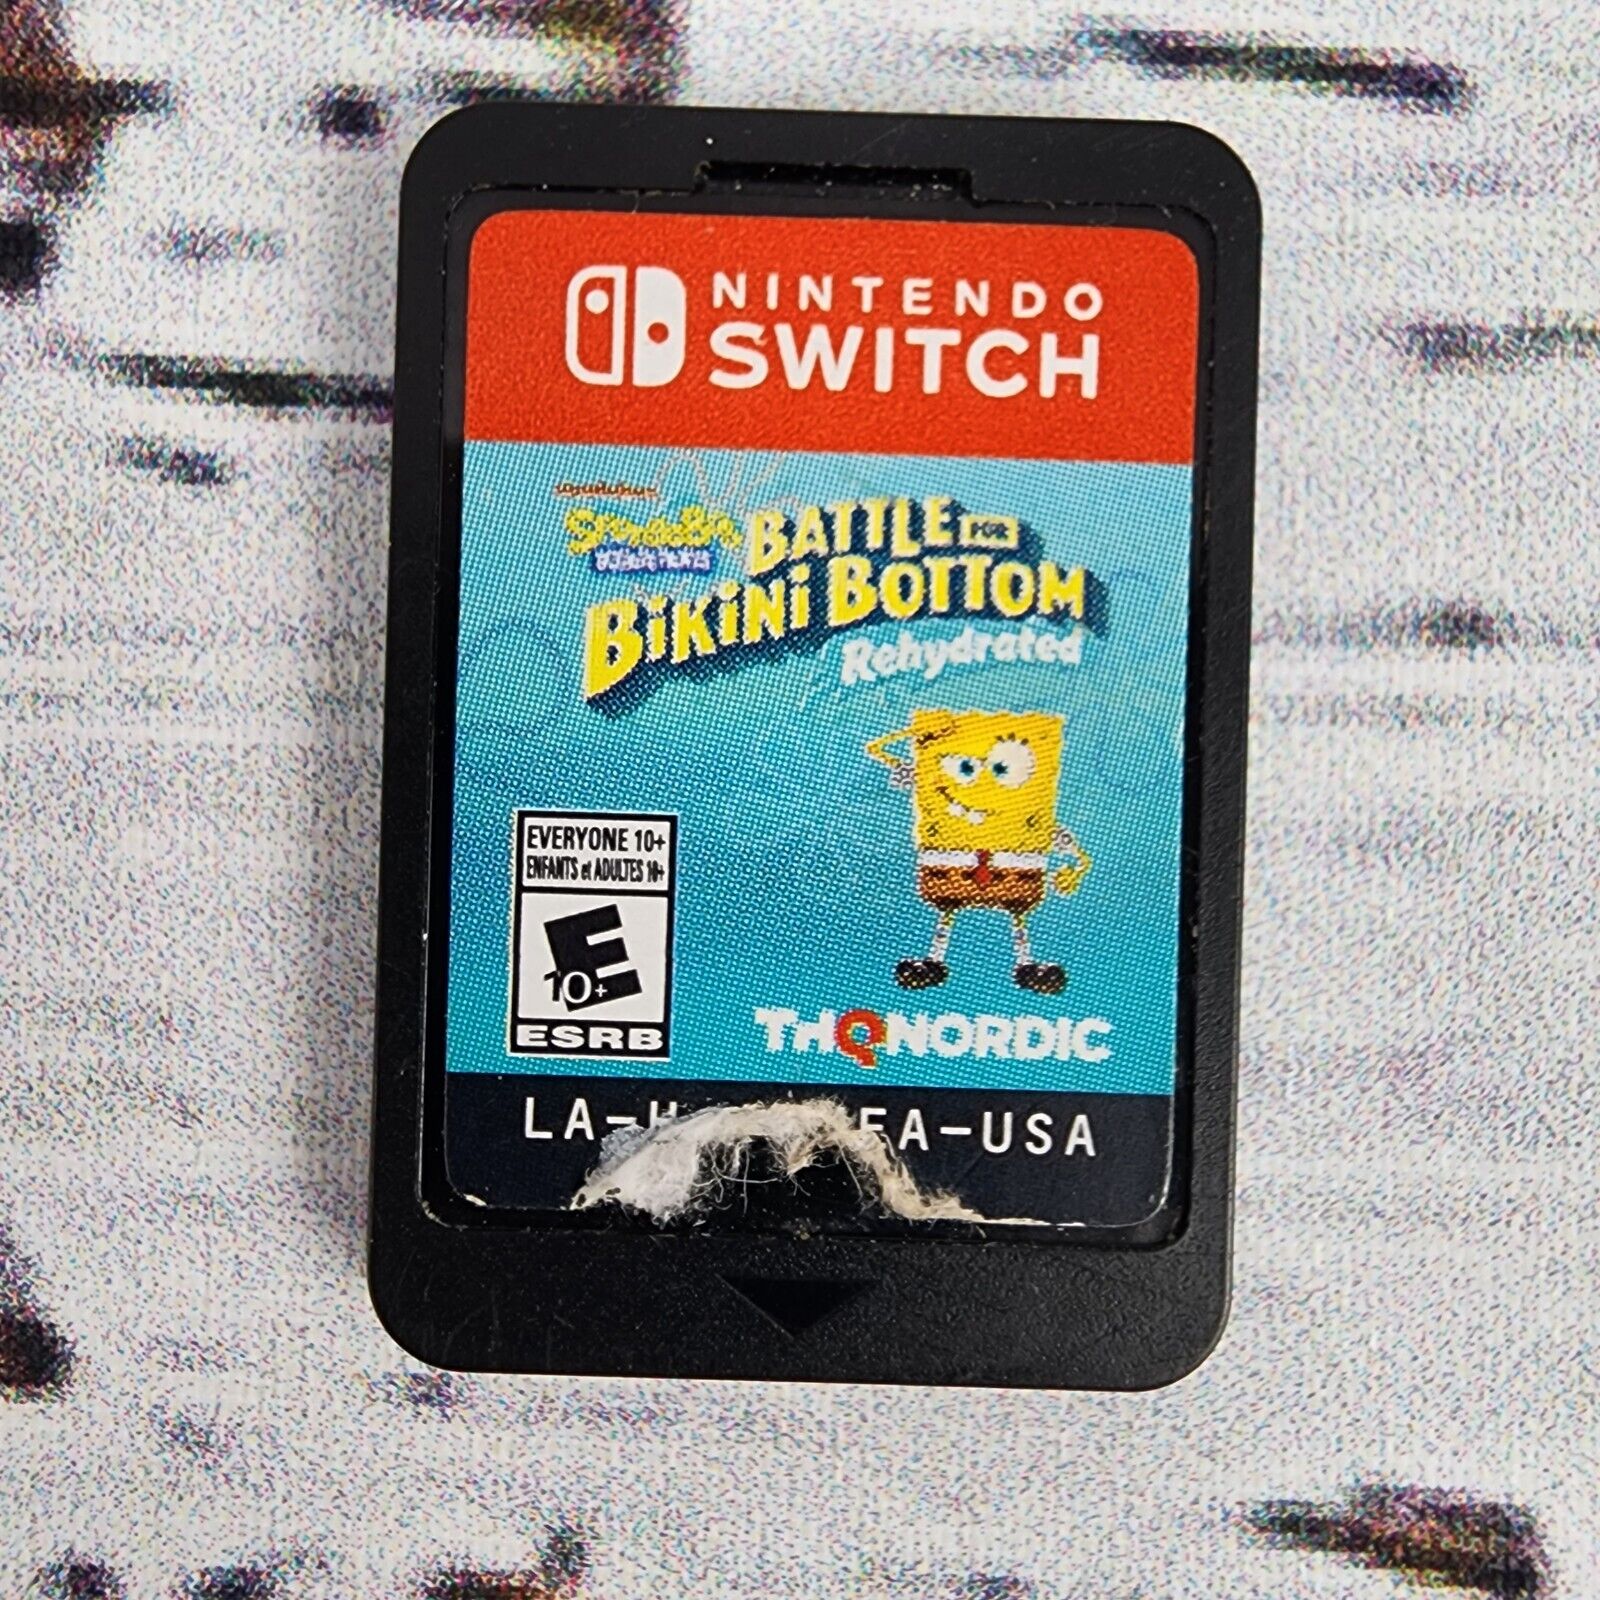 Switch - SpongeBob SquarePants Battle for Bikini Bottom Rehydrated - Used